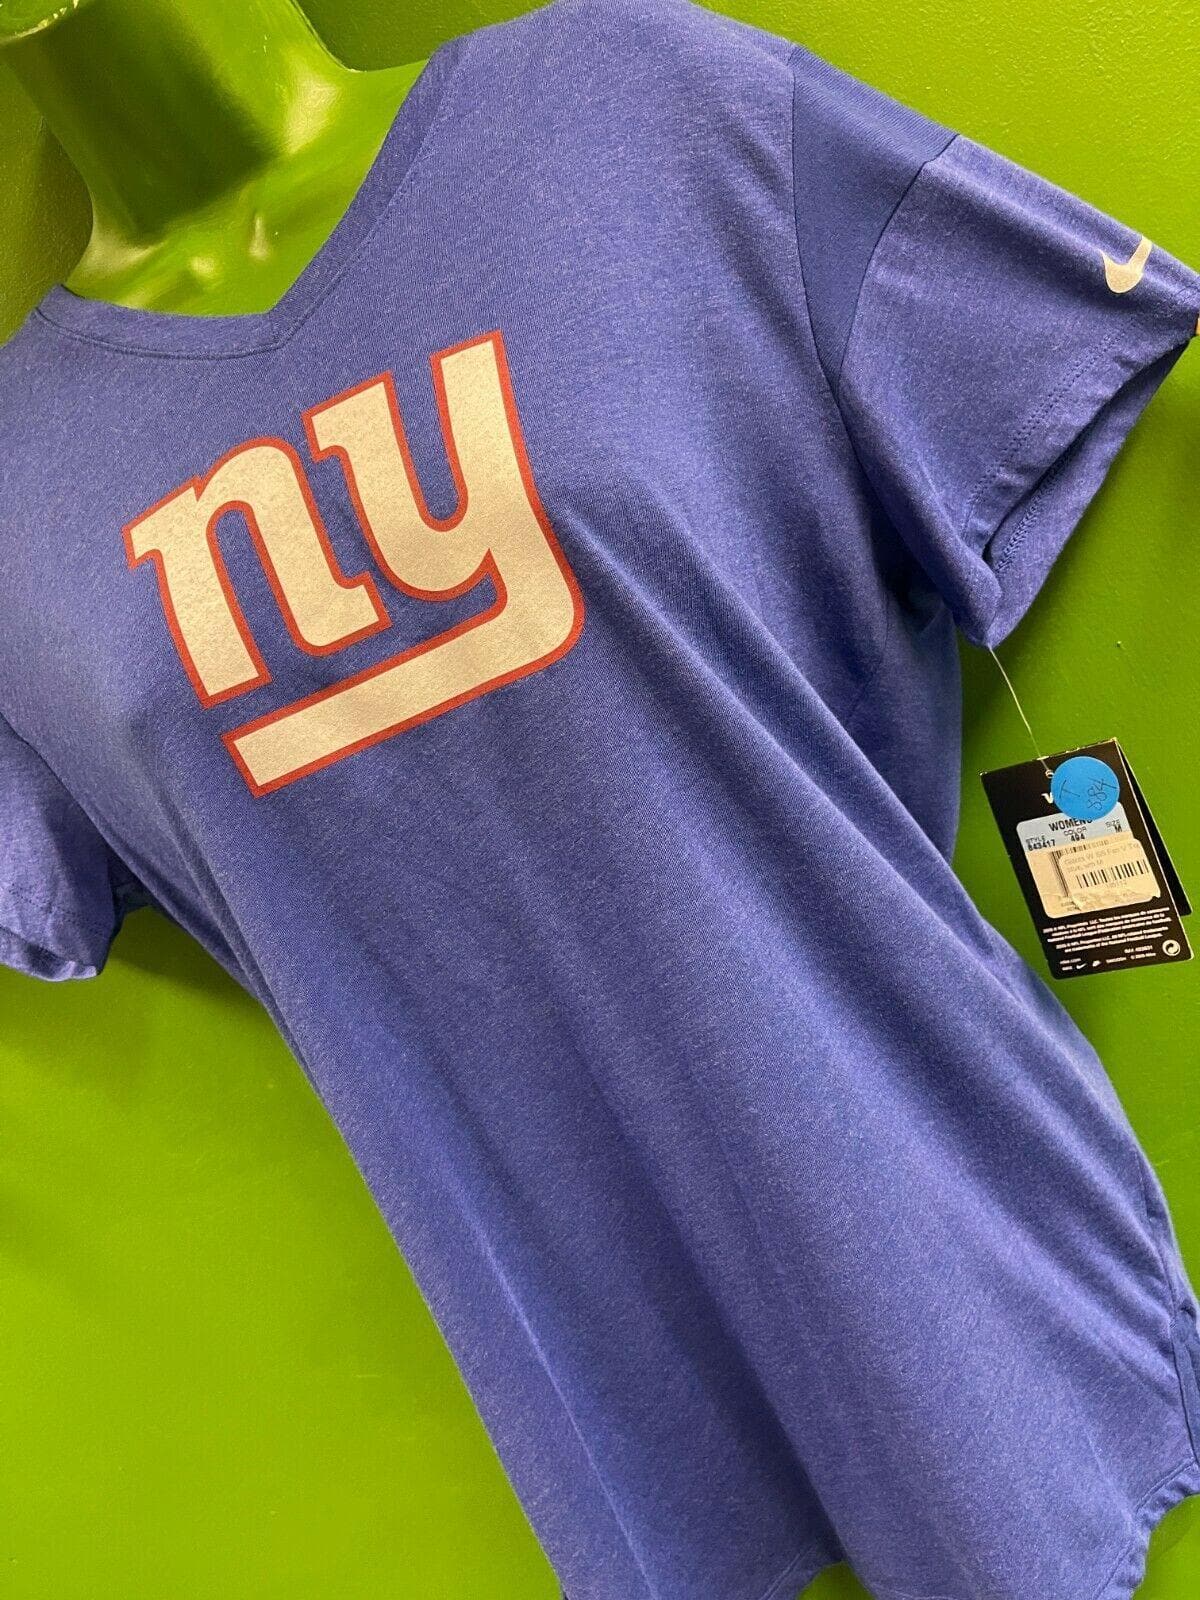 NFL New York Giants V-Neck Classic Logo T-Shirt Women's Large NWT